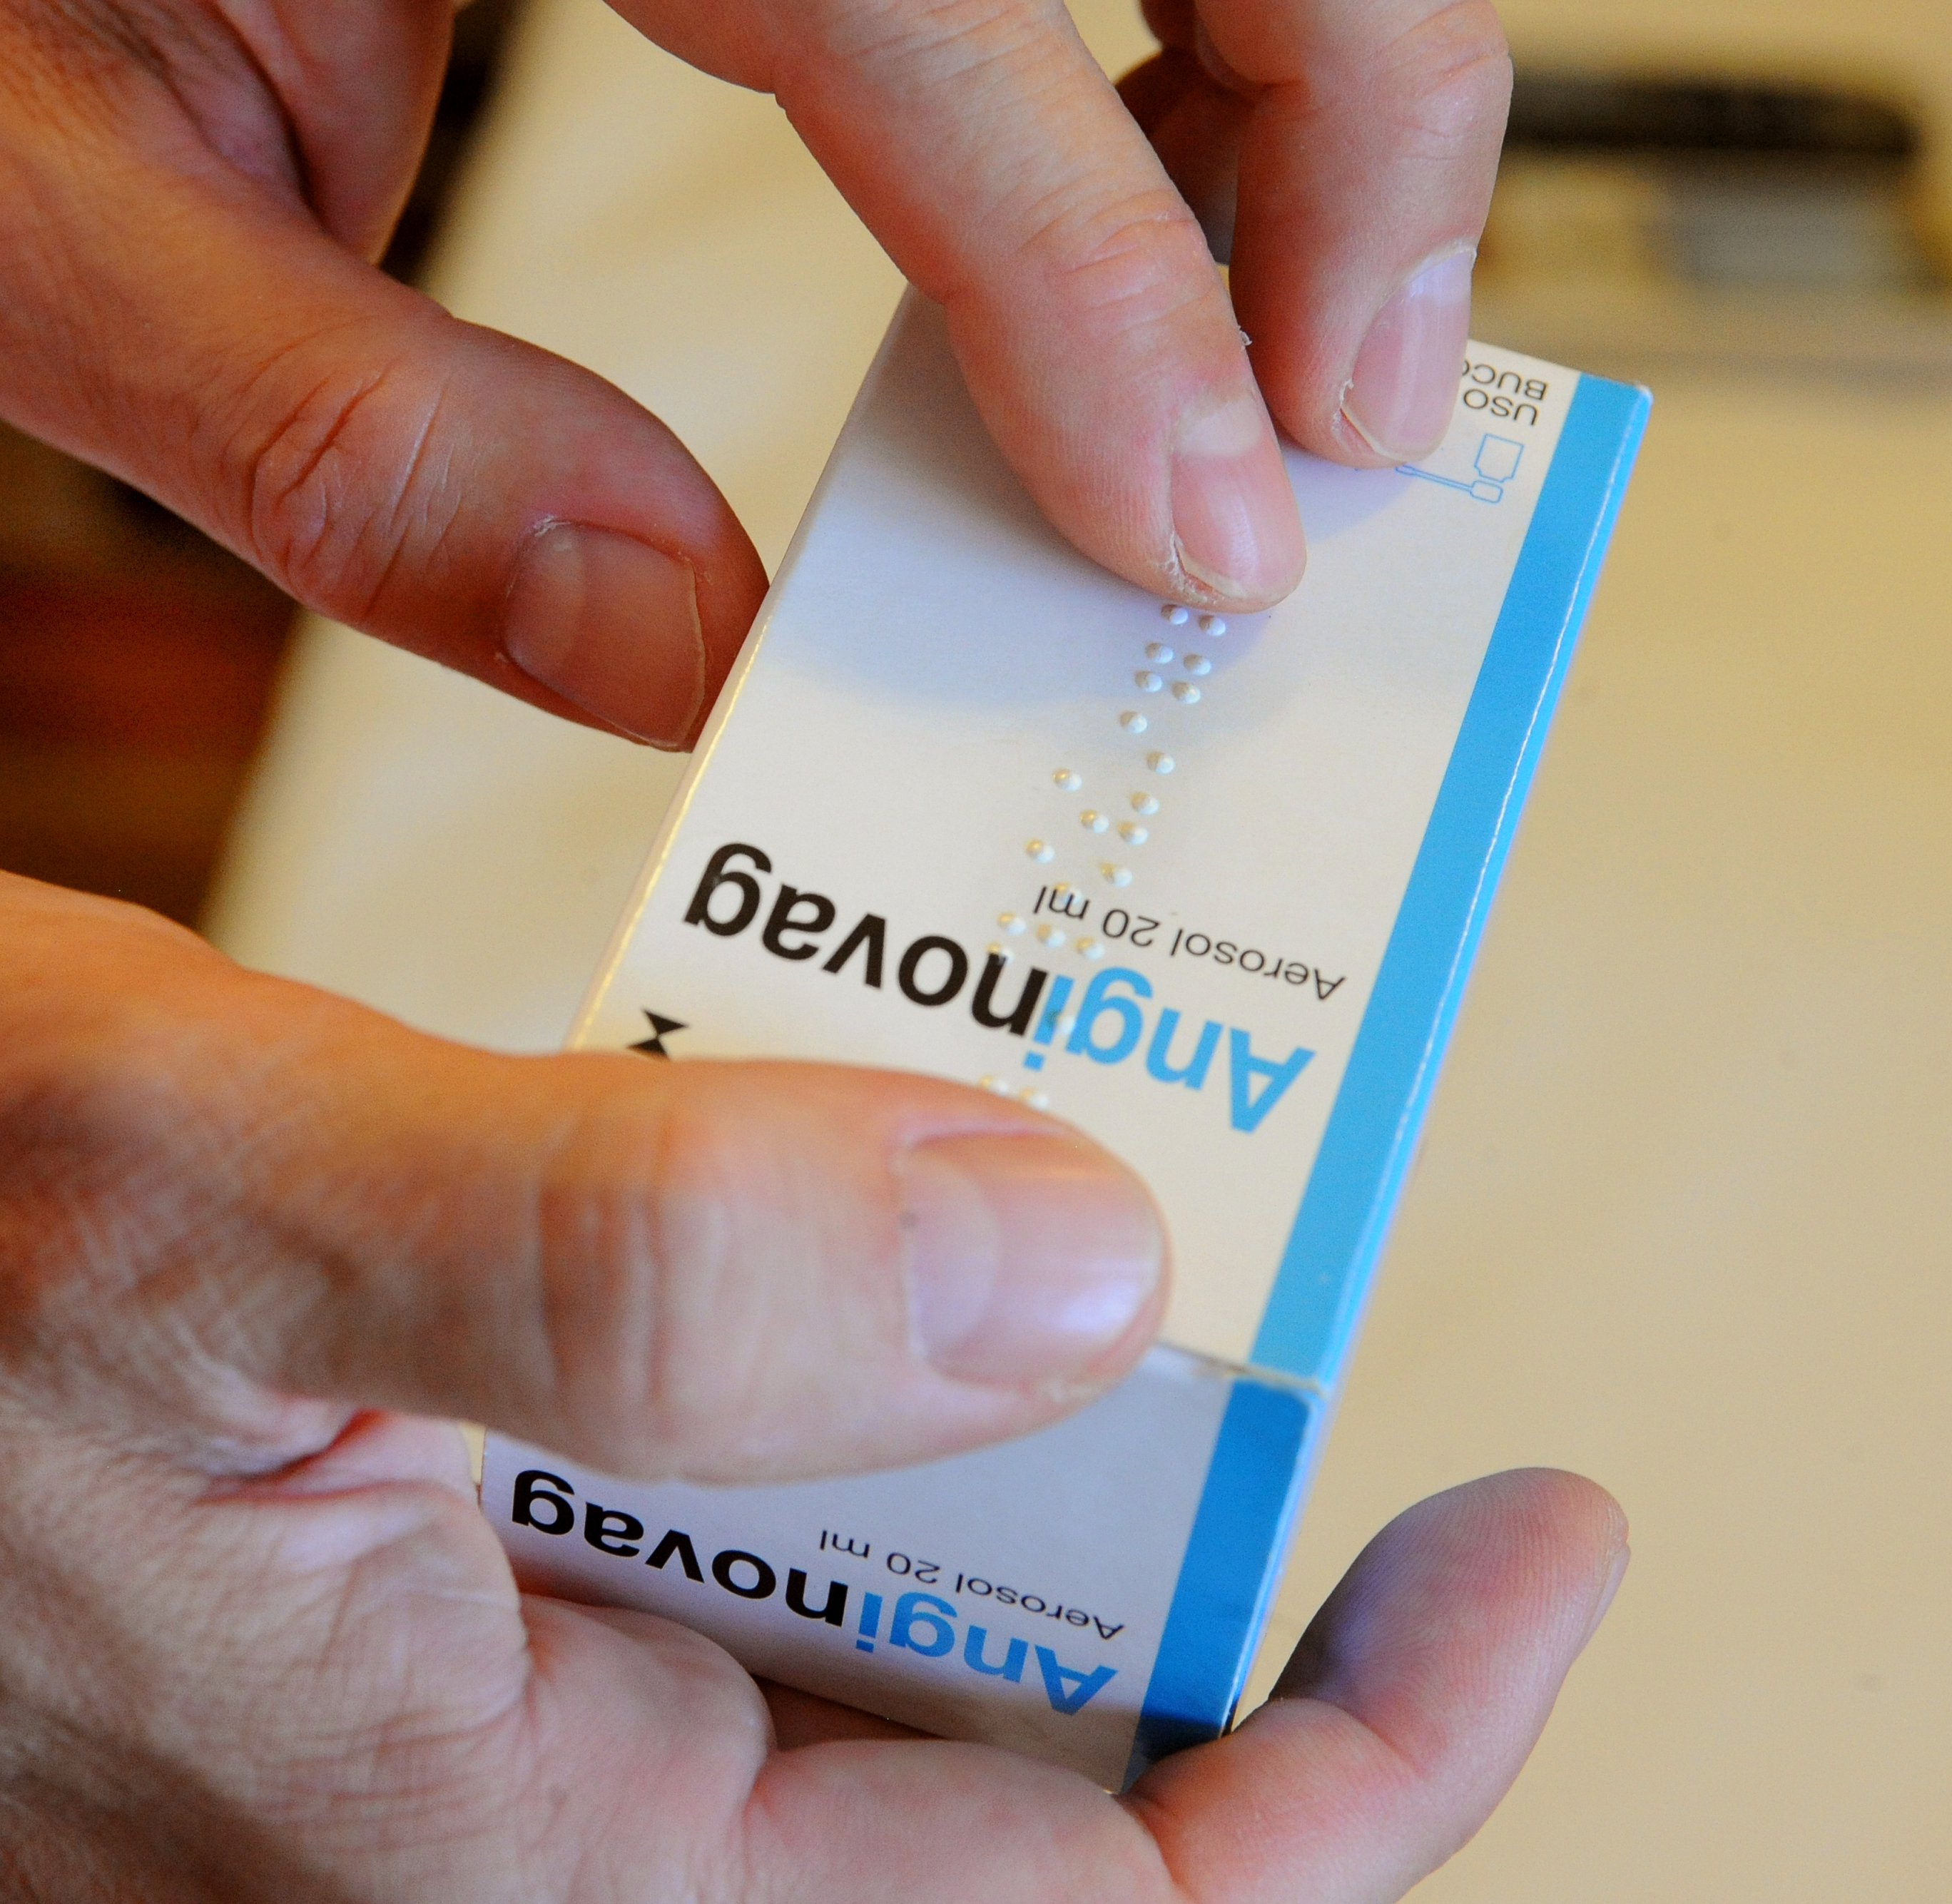 Medicamento etiquetado en braille